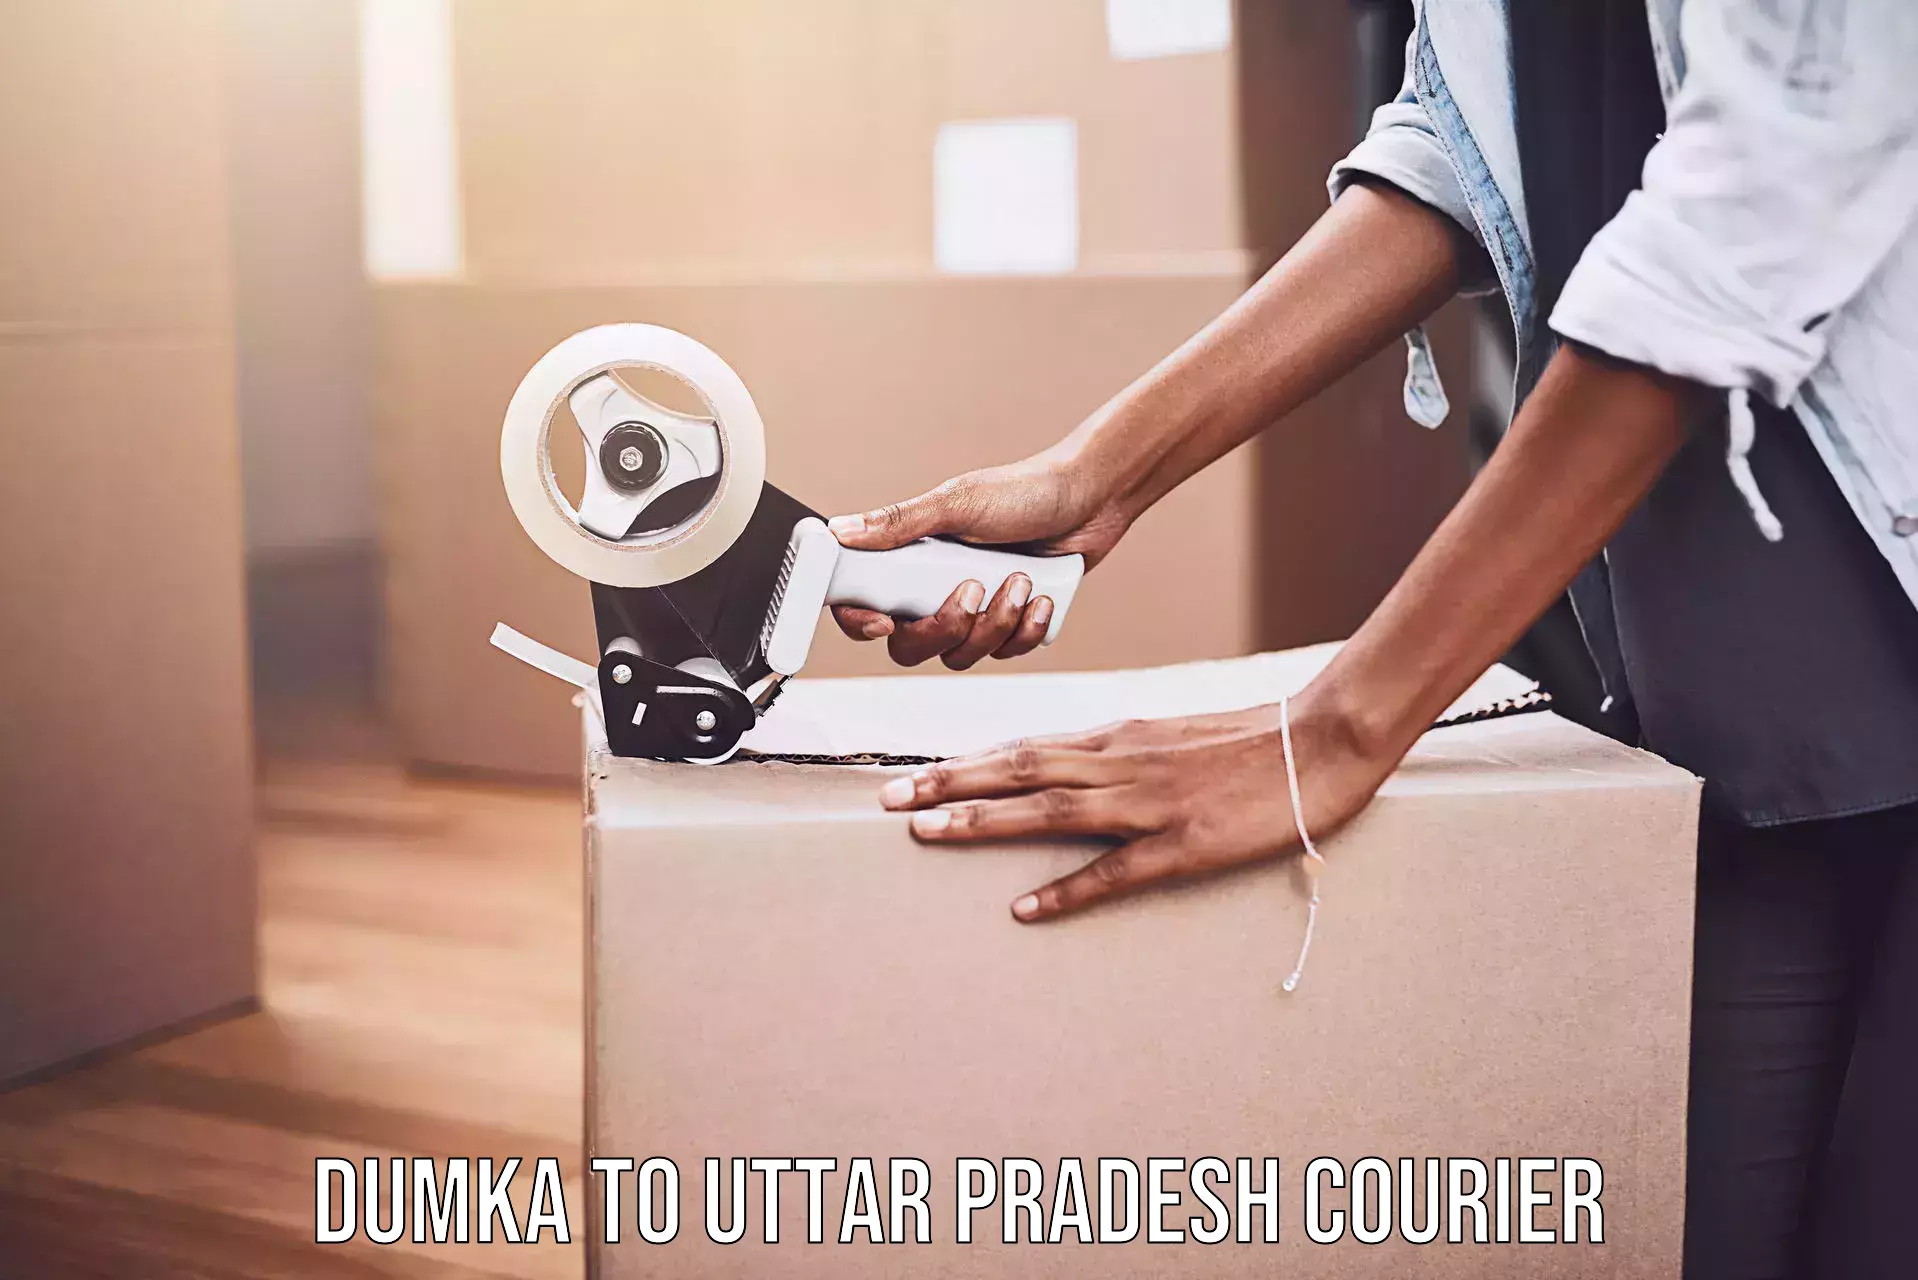 Advanced tracking systems Dumka to Uttar Pradesh